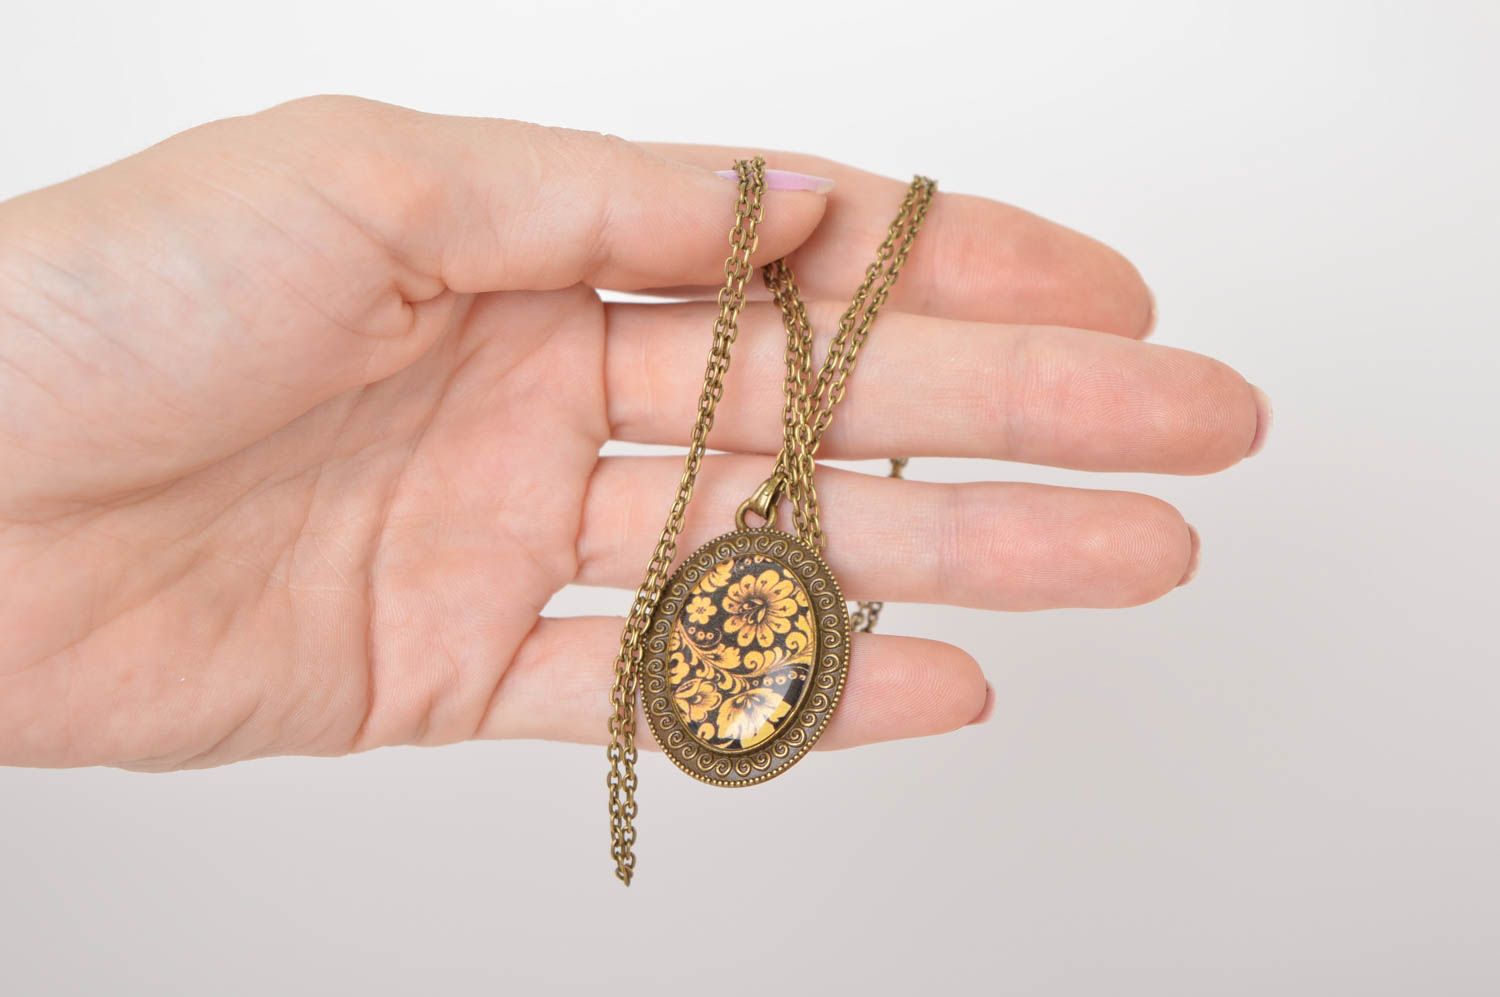 Handmade jewelry pendant necklace metal chain necklace designer accessories photo 5